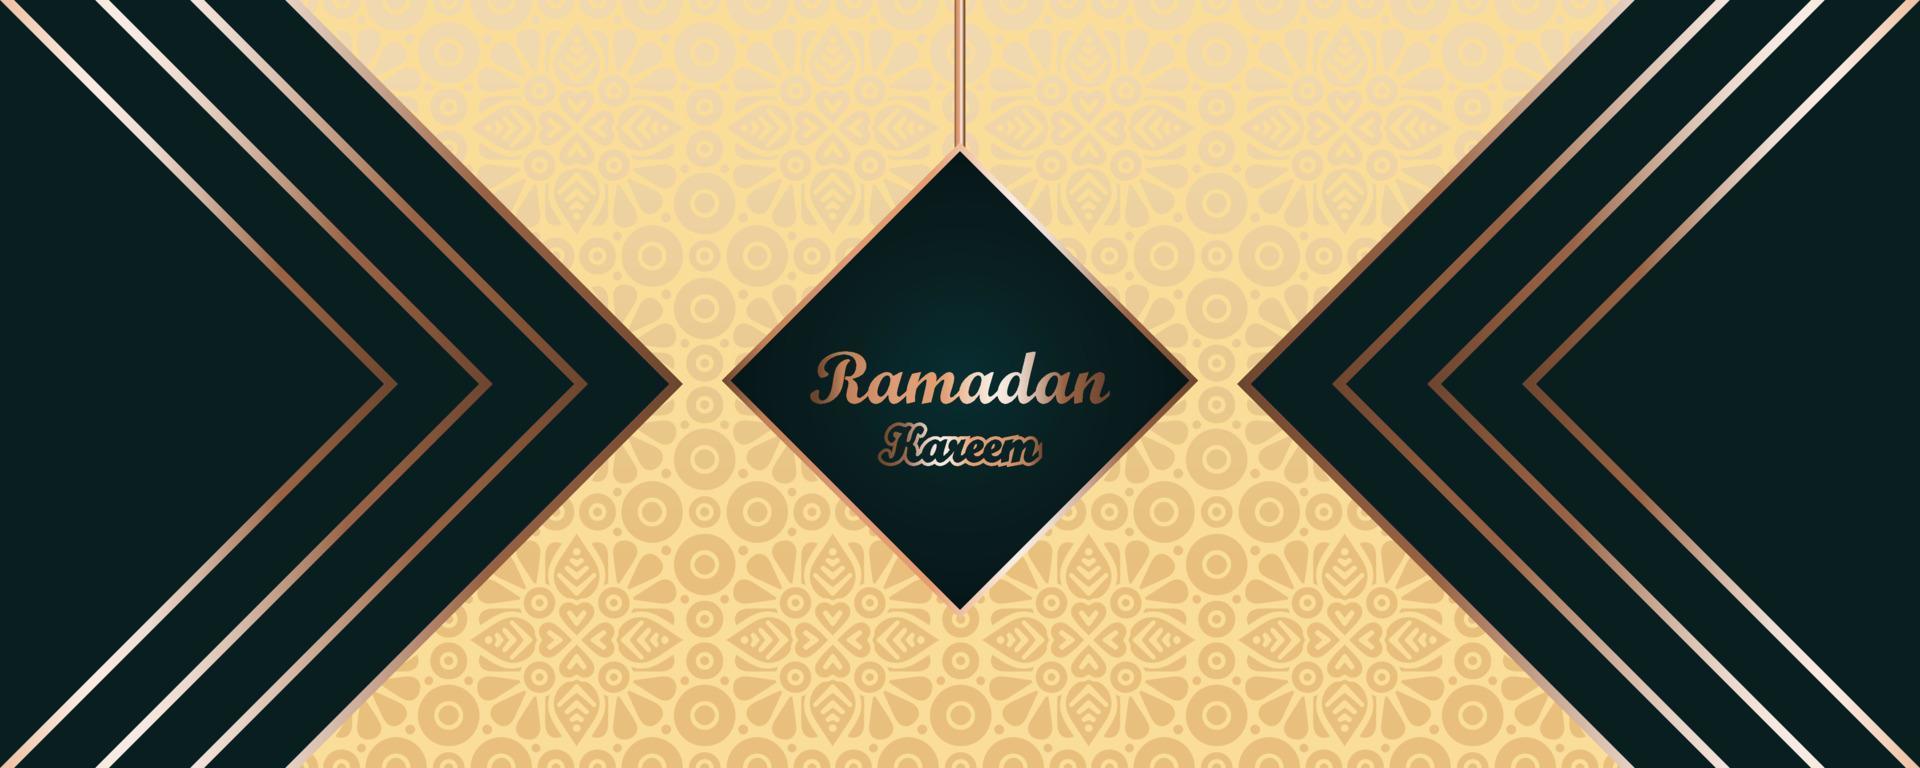 Ramadan kareem Islamic golden luxurious background design. banner, invitation, poster, card for the celebration of Muslim community festival. vector